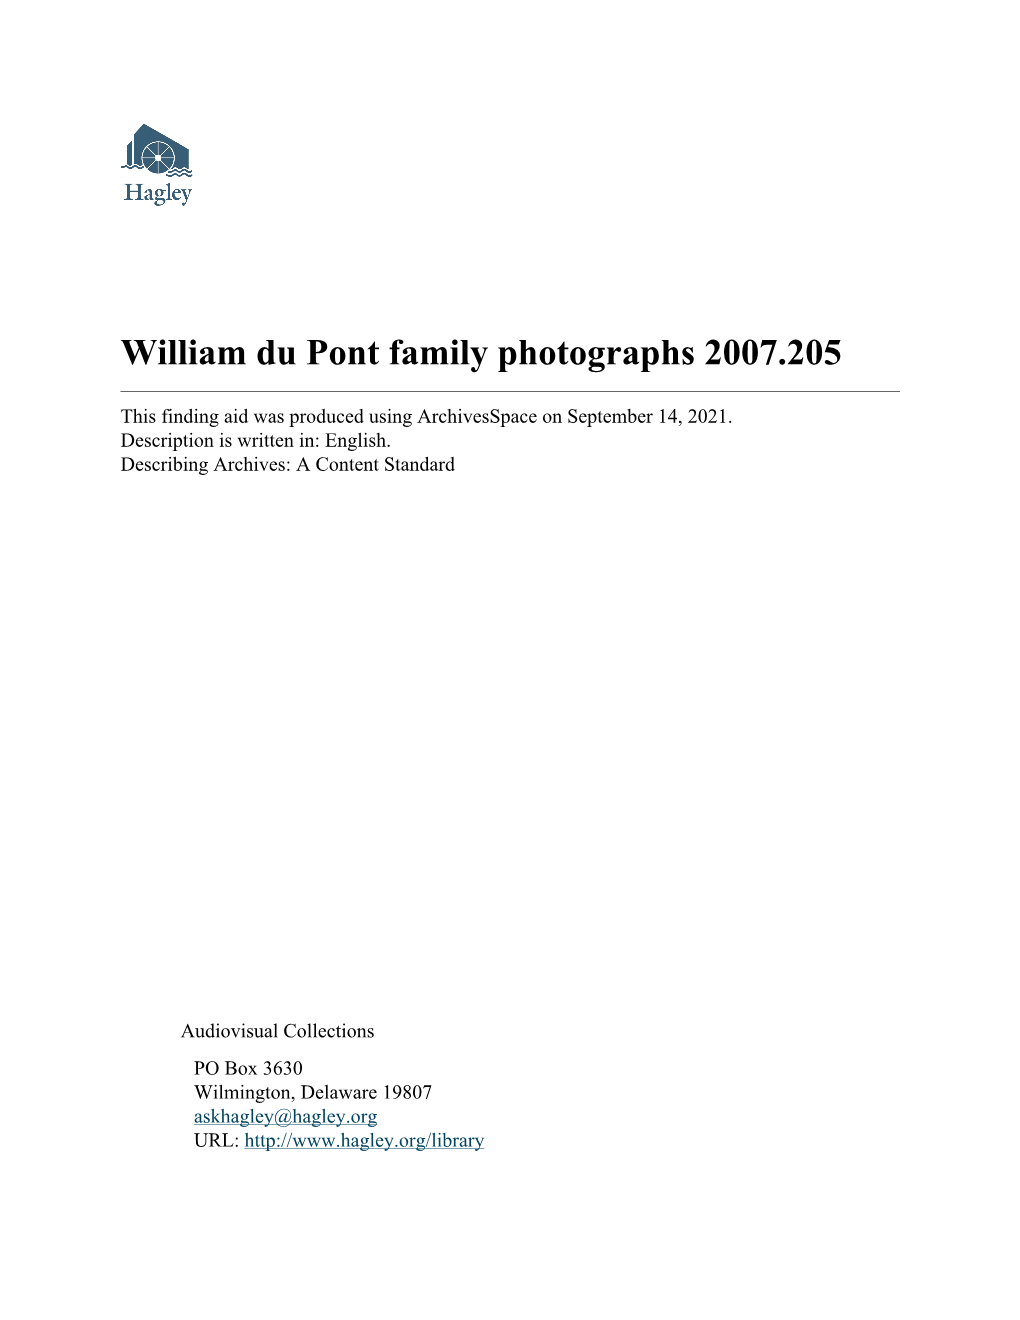 William Du Pont and William Du Pont, Jr. Photographs